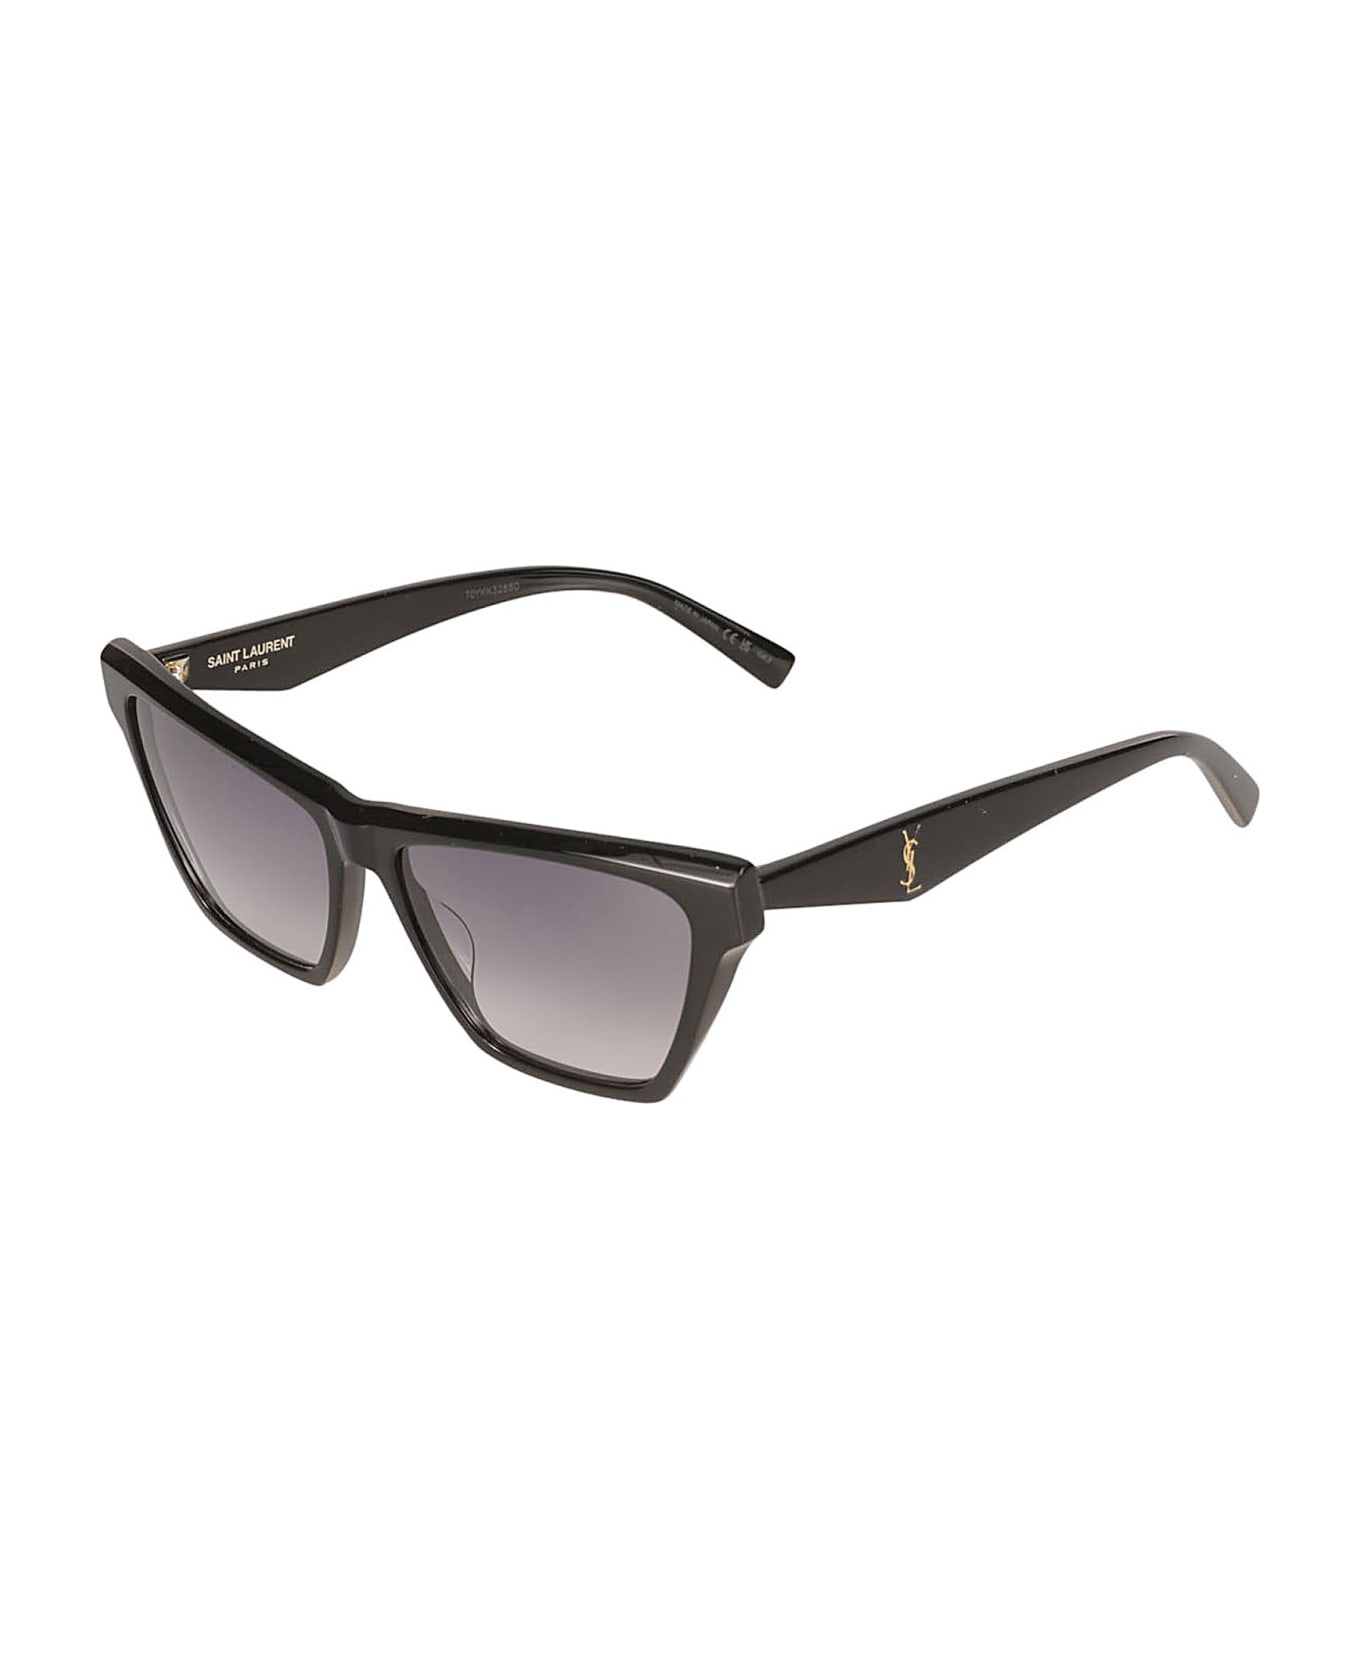 Saint Laurent Eyewear Ysl Plaque Square Frame Sunglasses - Black/Grey サングラス